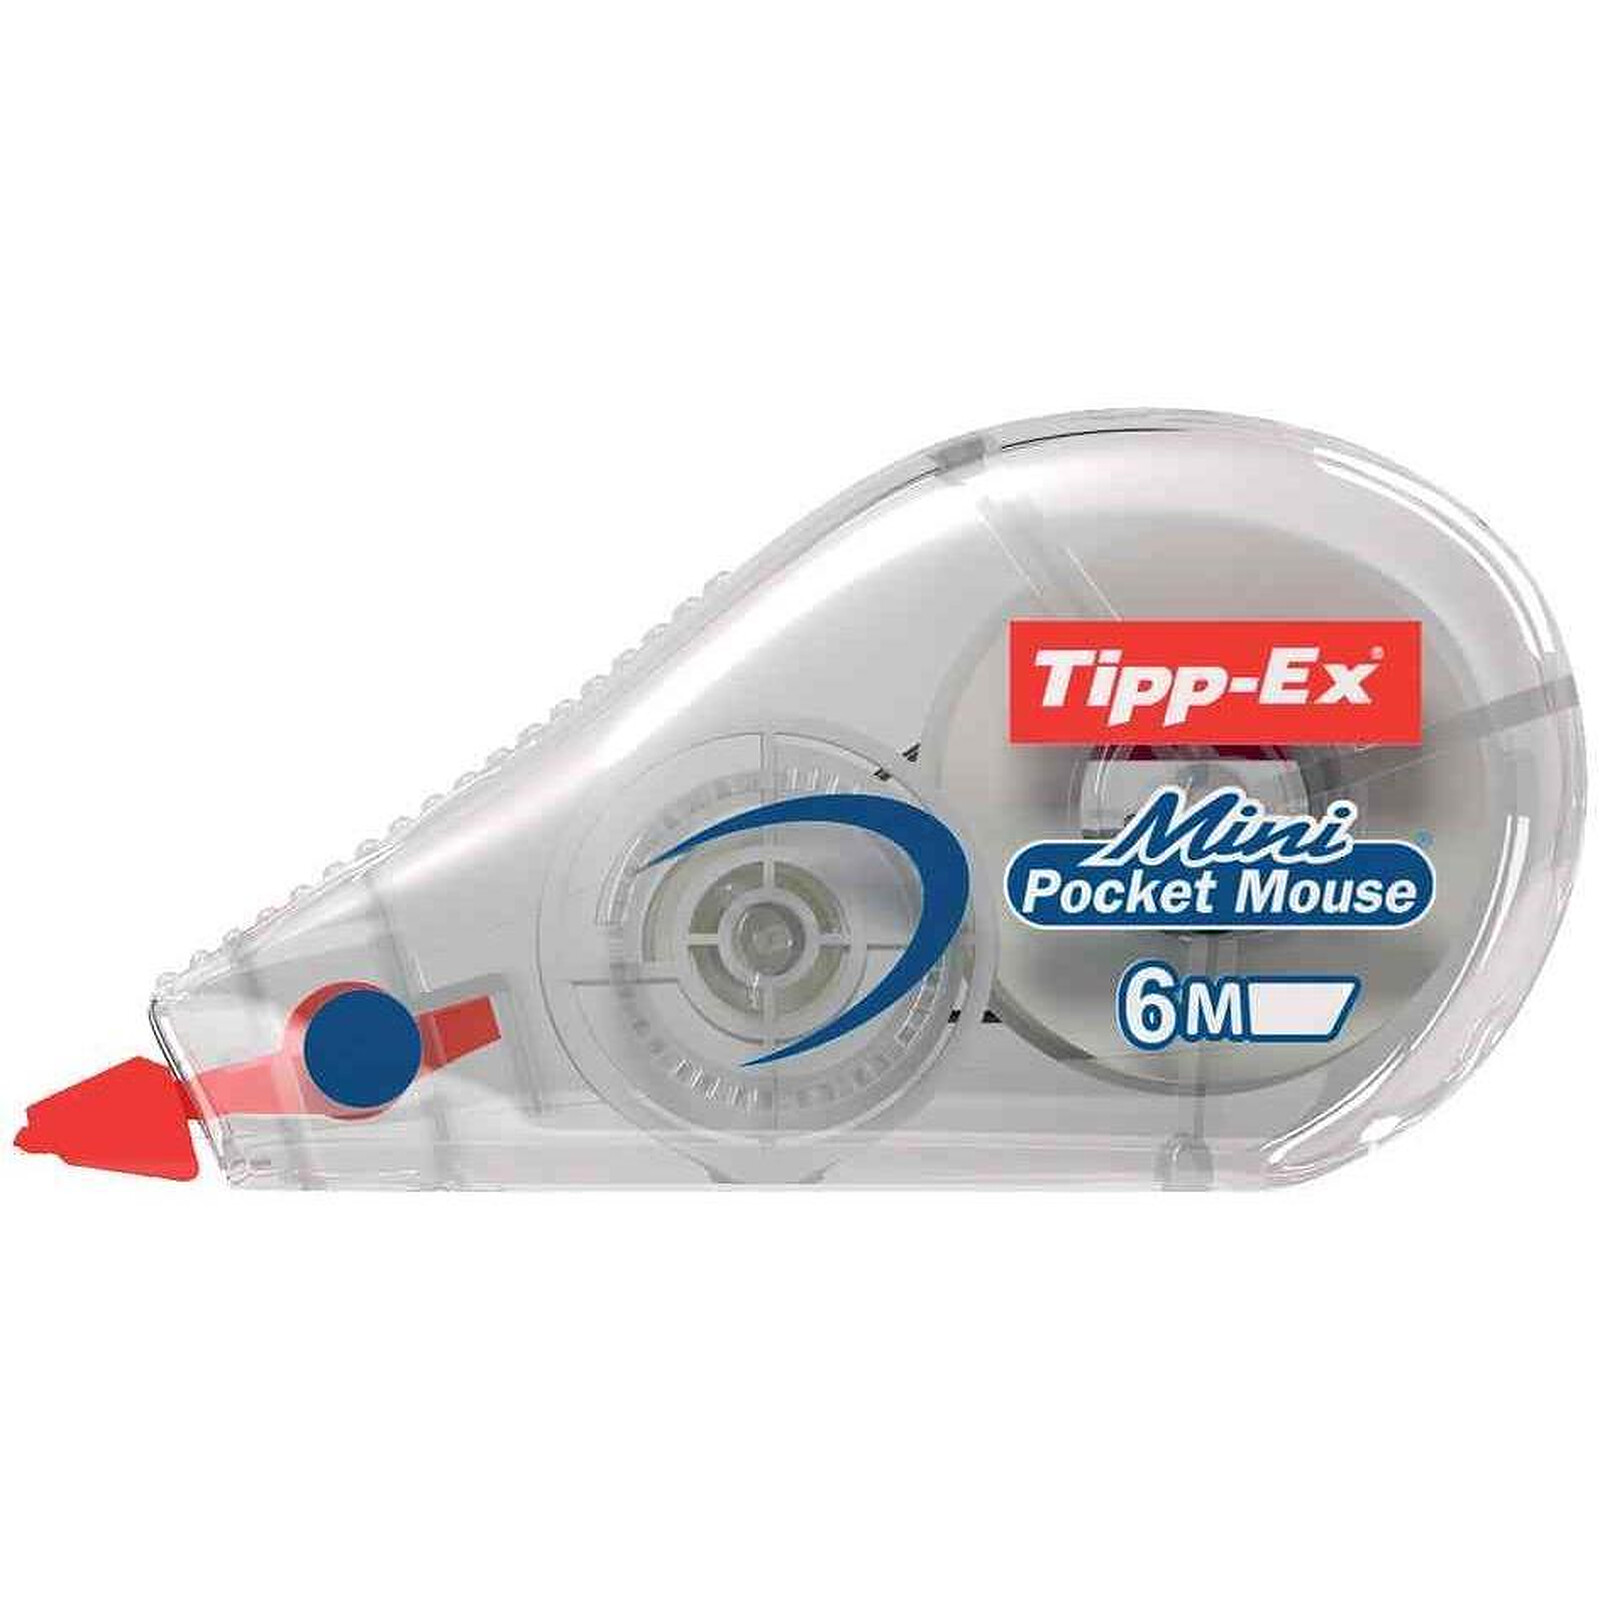 TIPP-EX correcteur minipocket mouse - Correcteur - LDLC